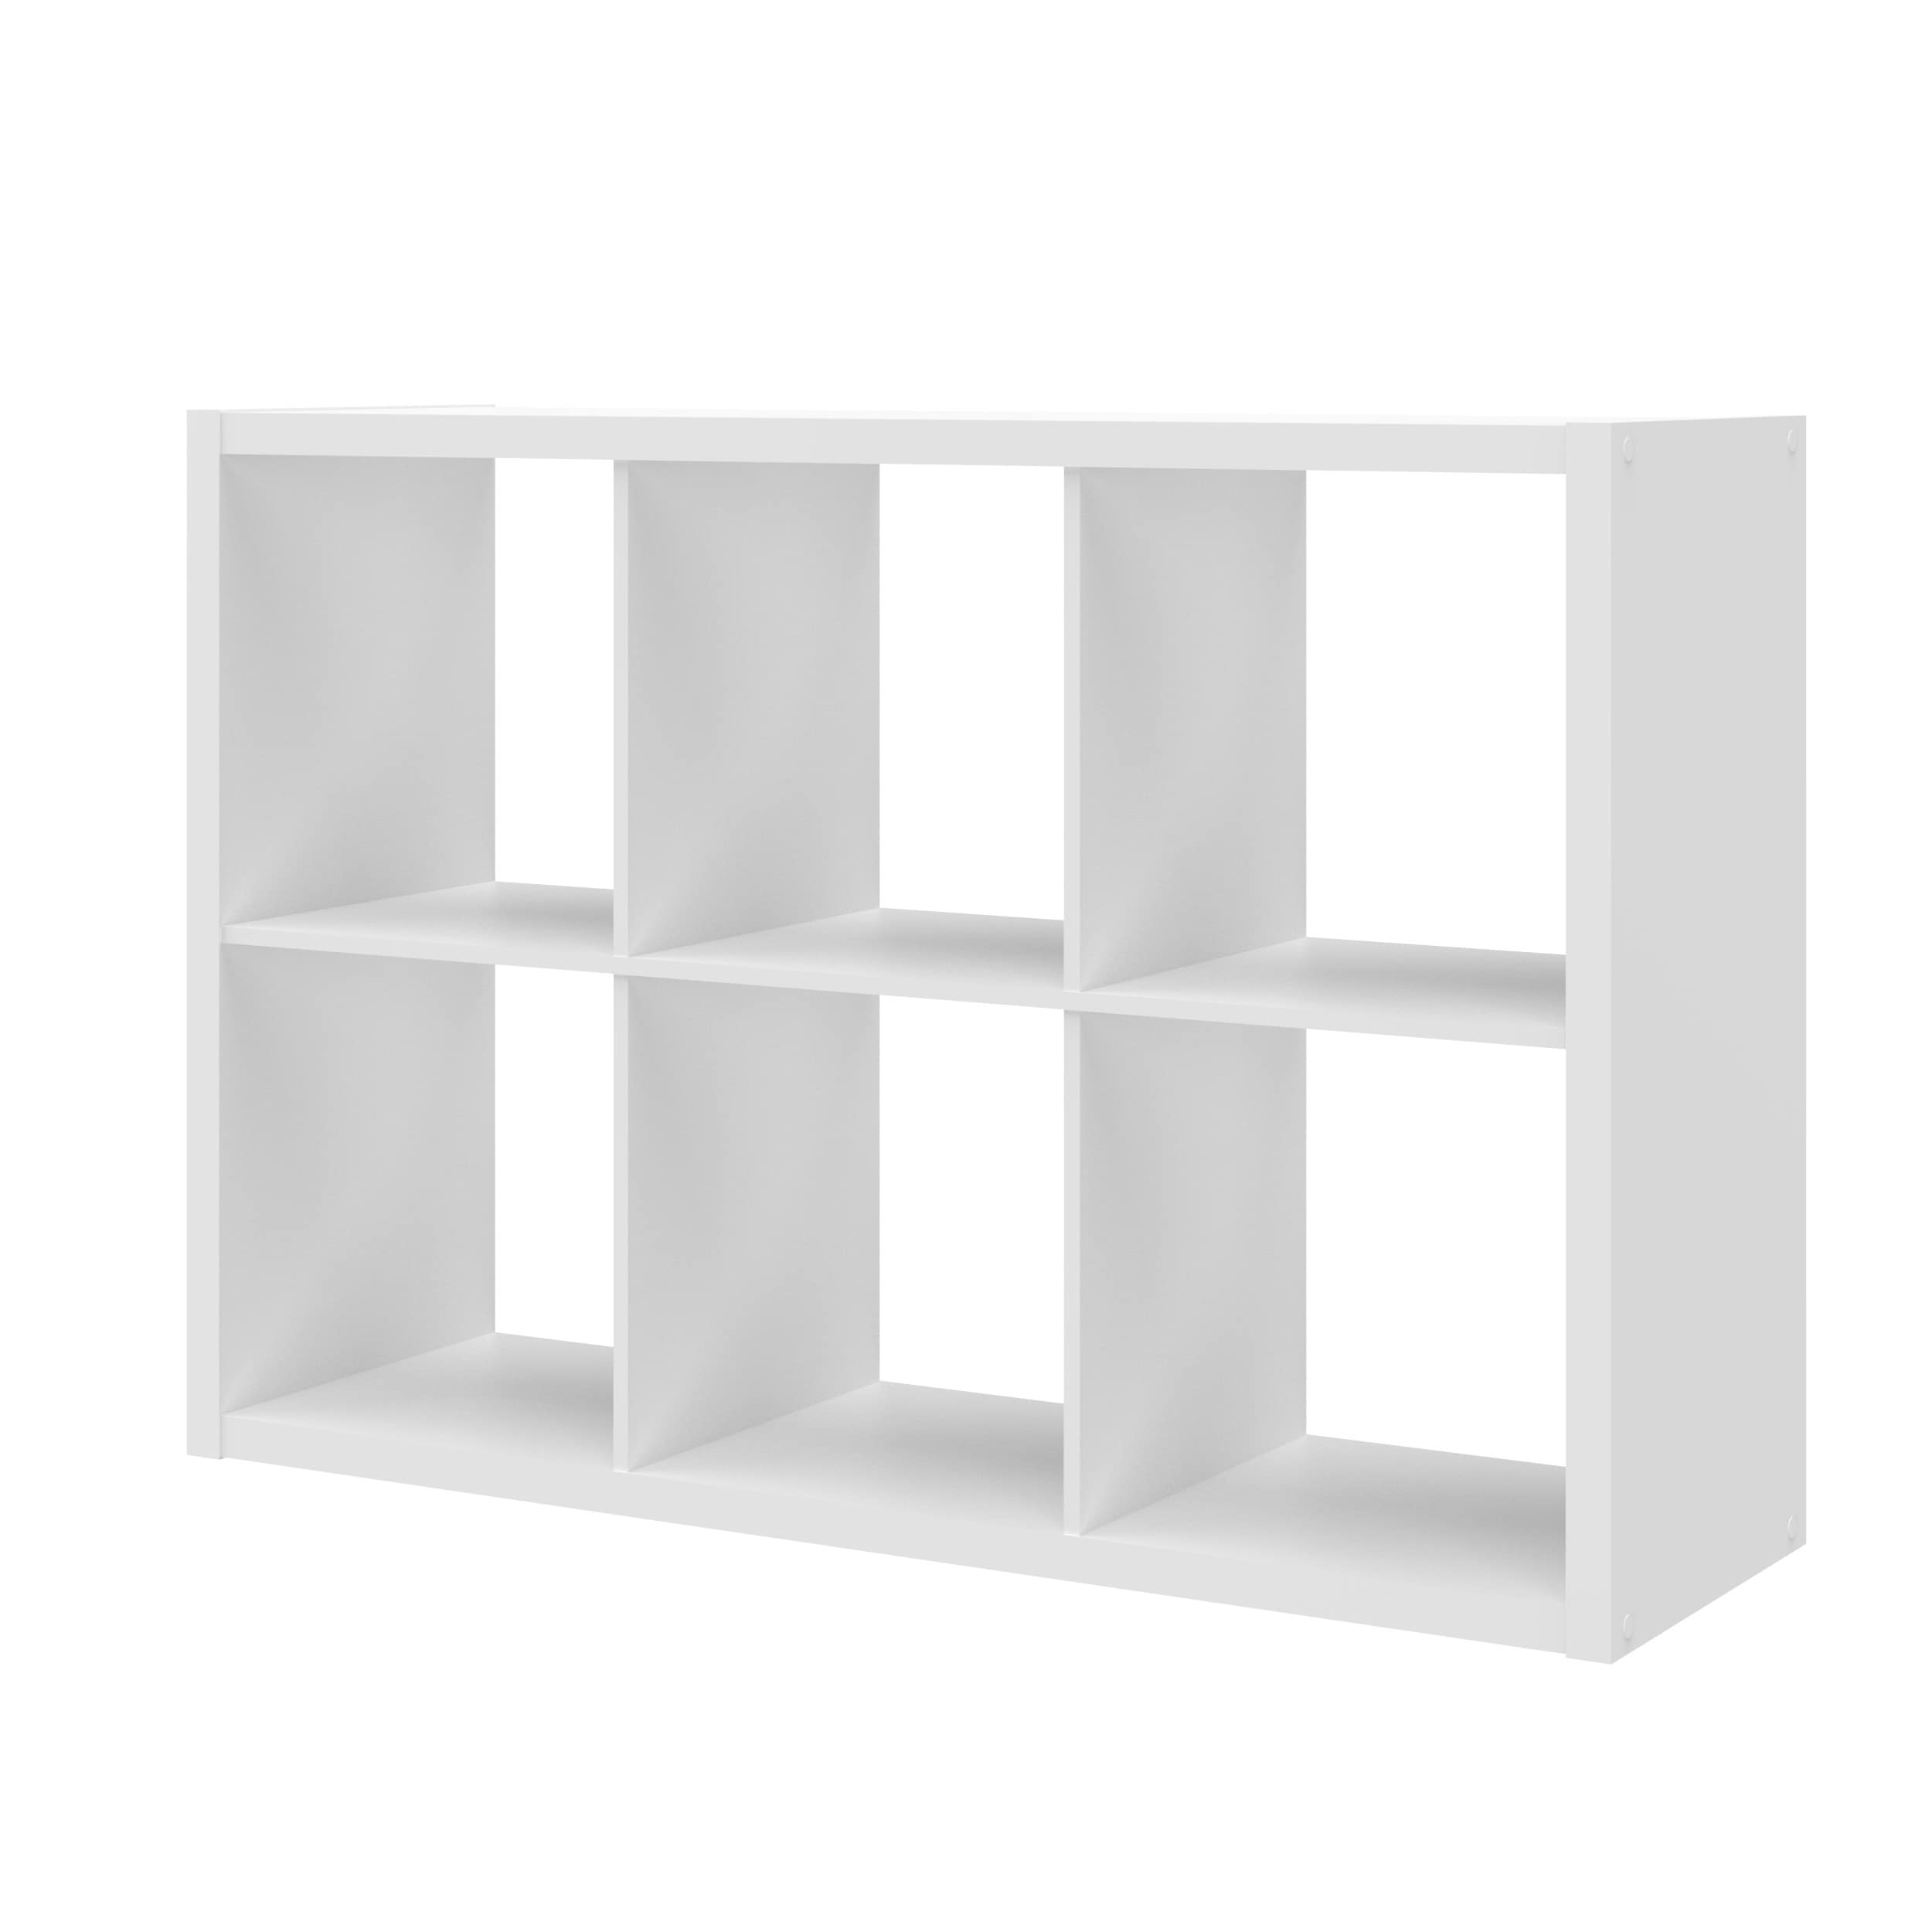 Details about   8/6 Cube Storage Unit Cubby Organizer Shelf Rack Cabinet Shelves Furniture Home 